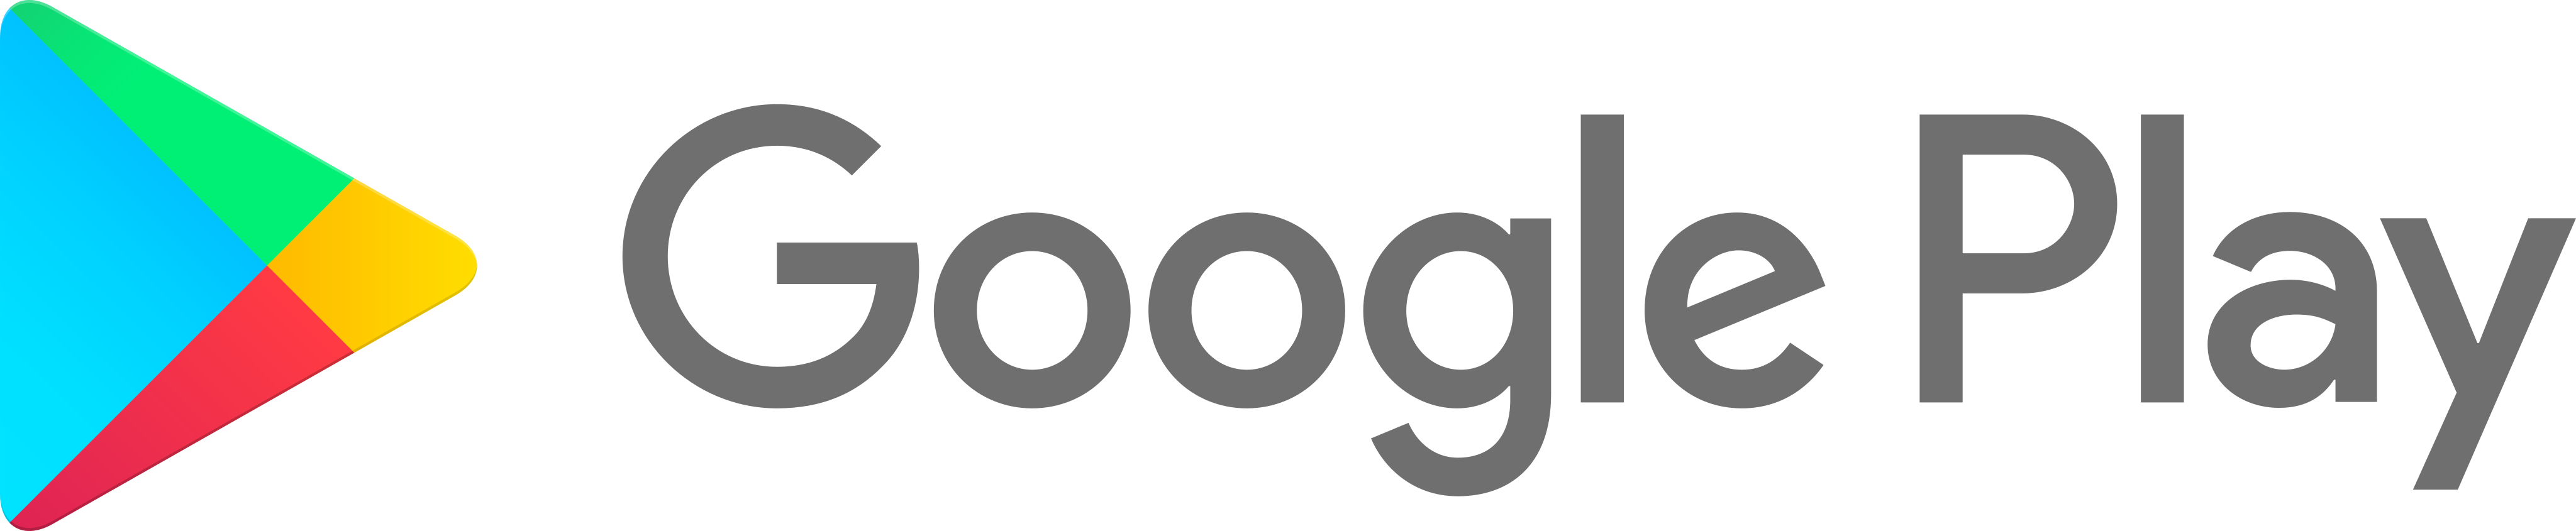 Google Play Logo - PNG and Vector - Logo Download